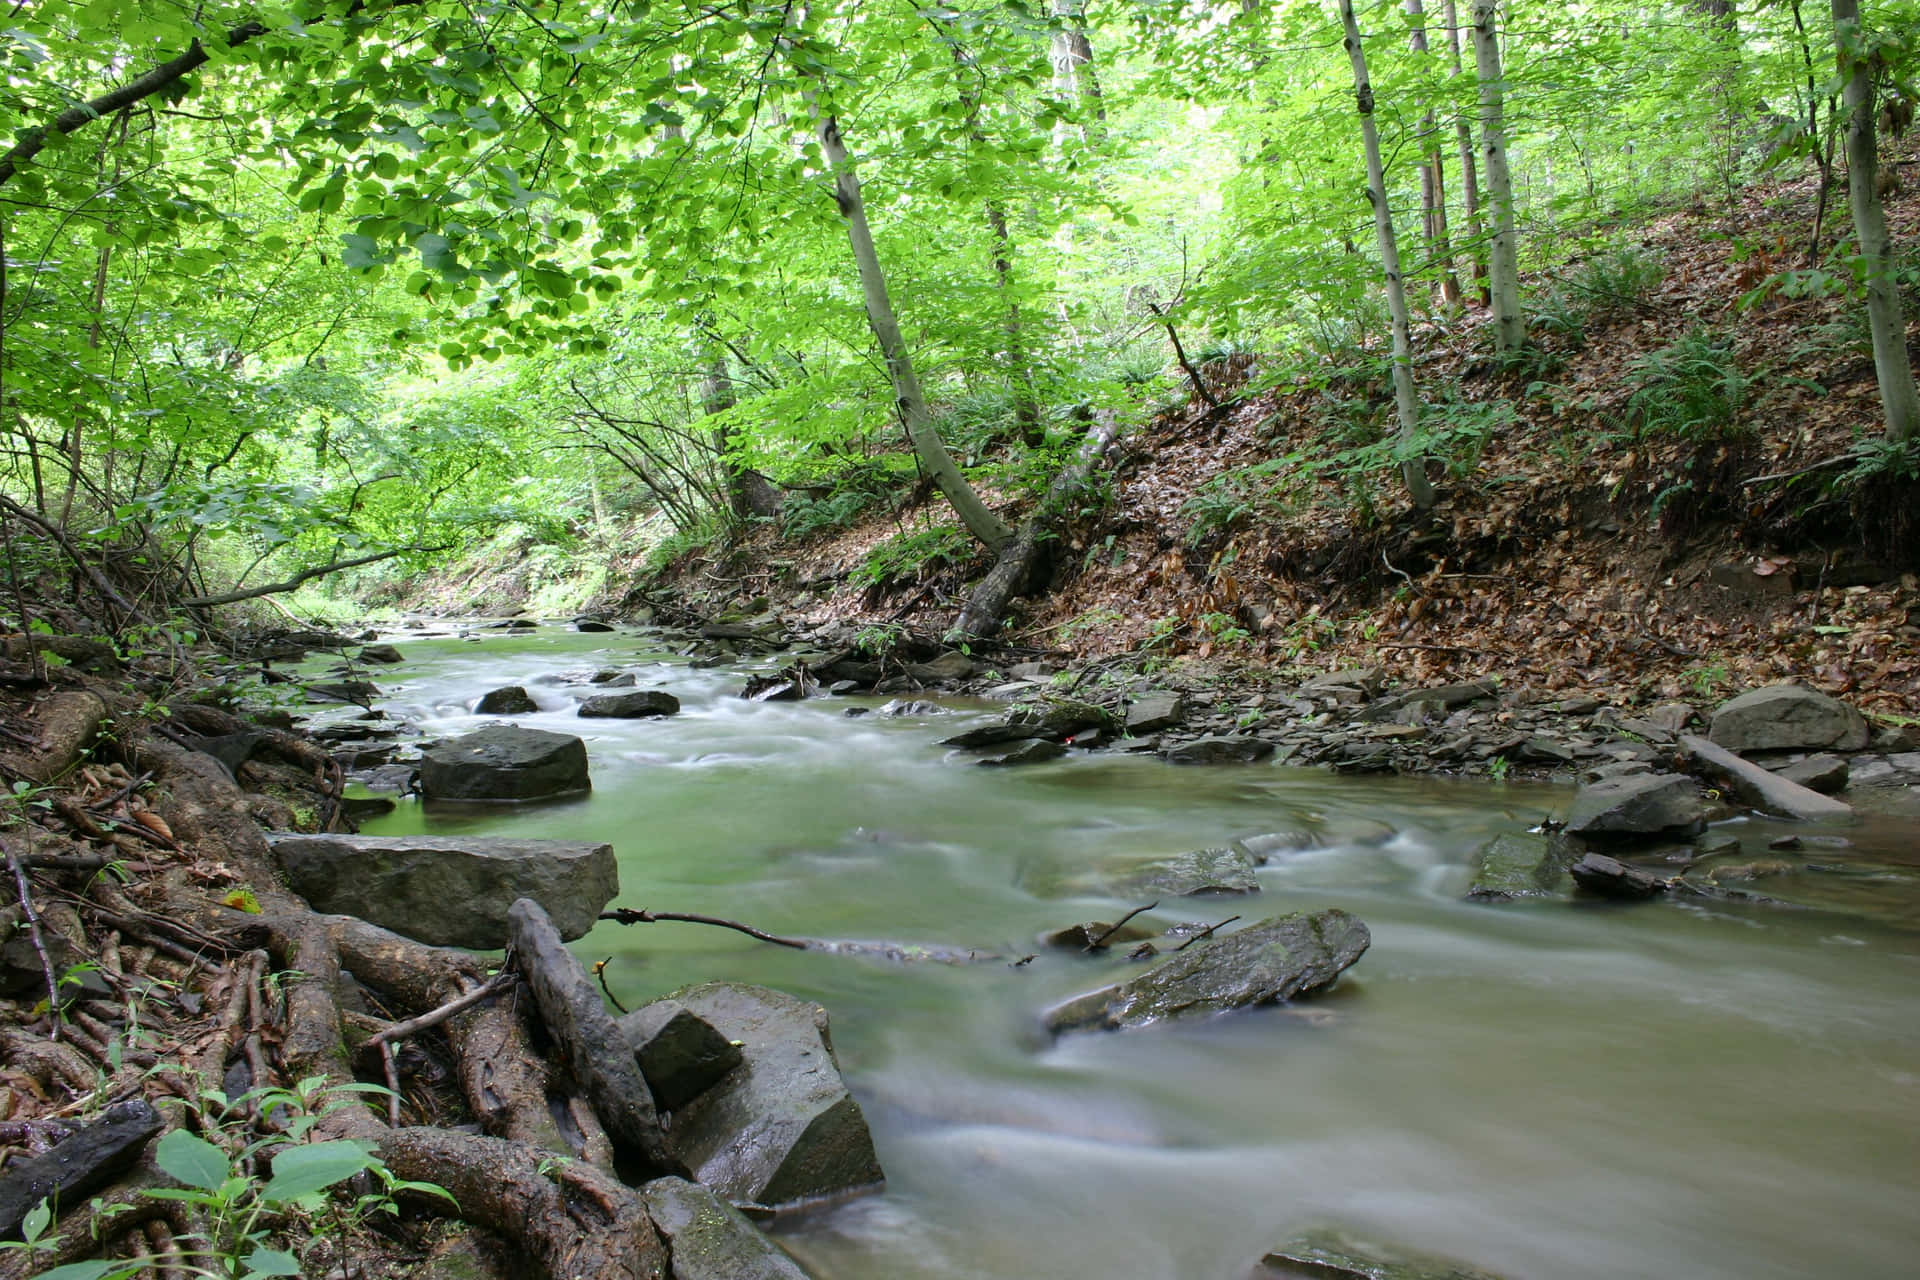 A peaceful nature scene, a babbling creek running through grassy hills.